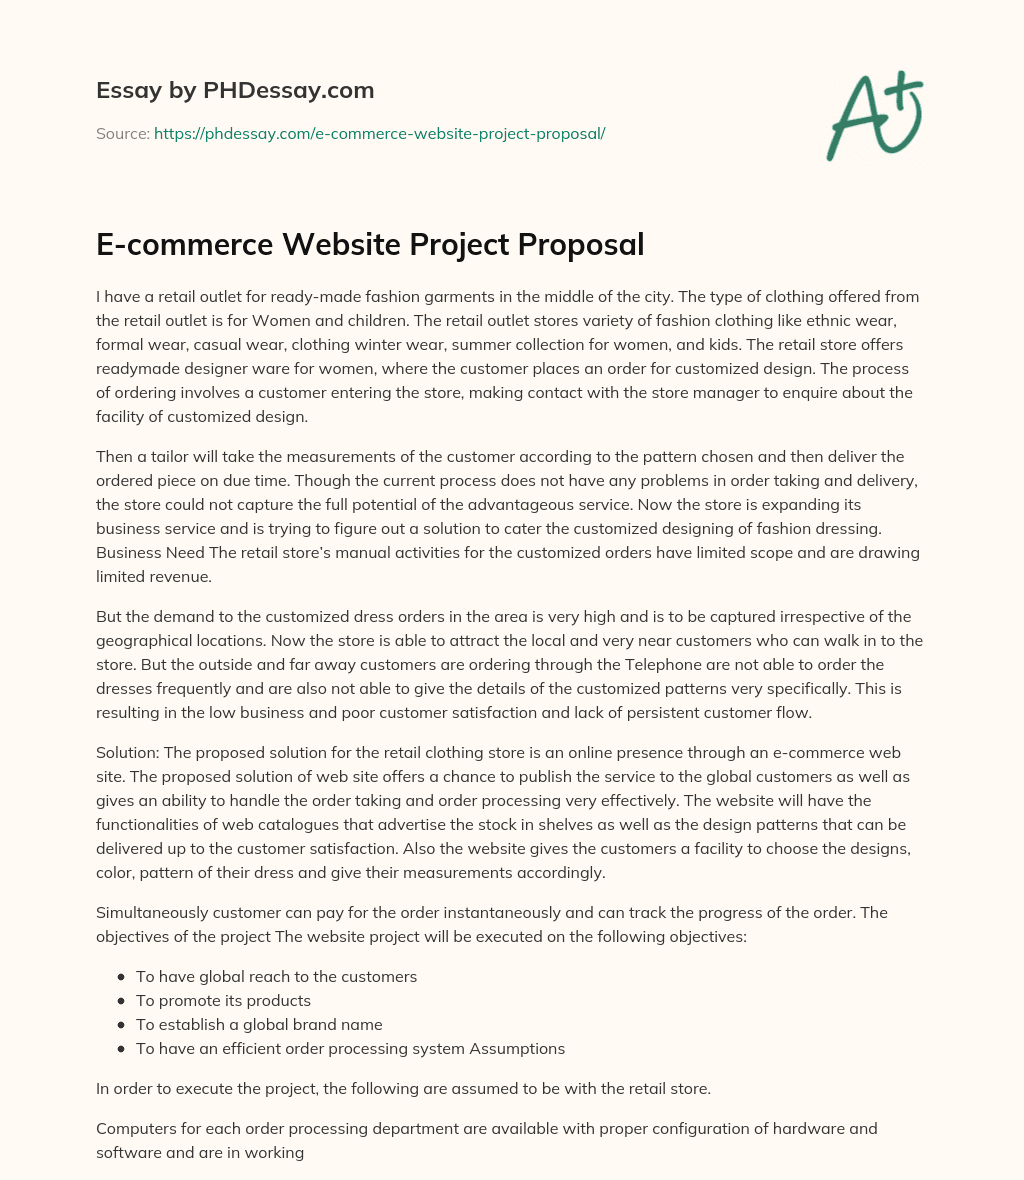 ECommerce Website Project Proposal Sample  PHDessay.com